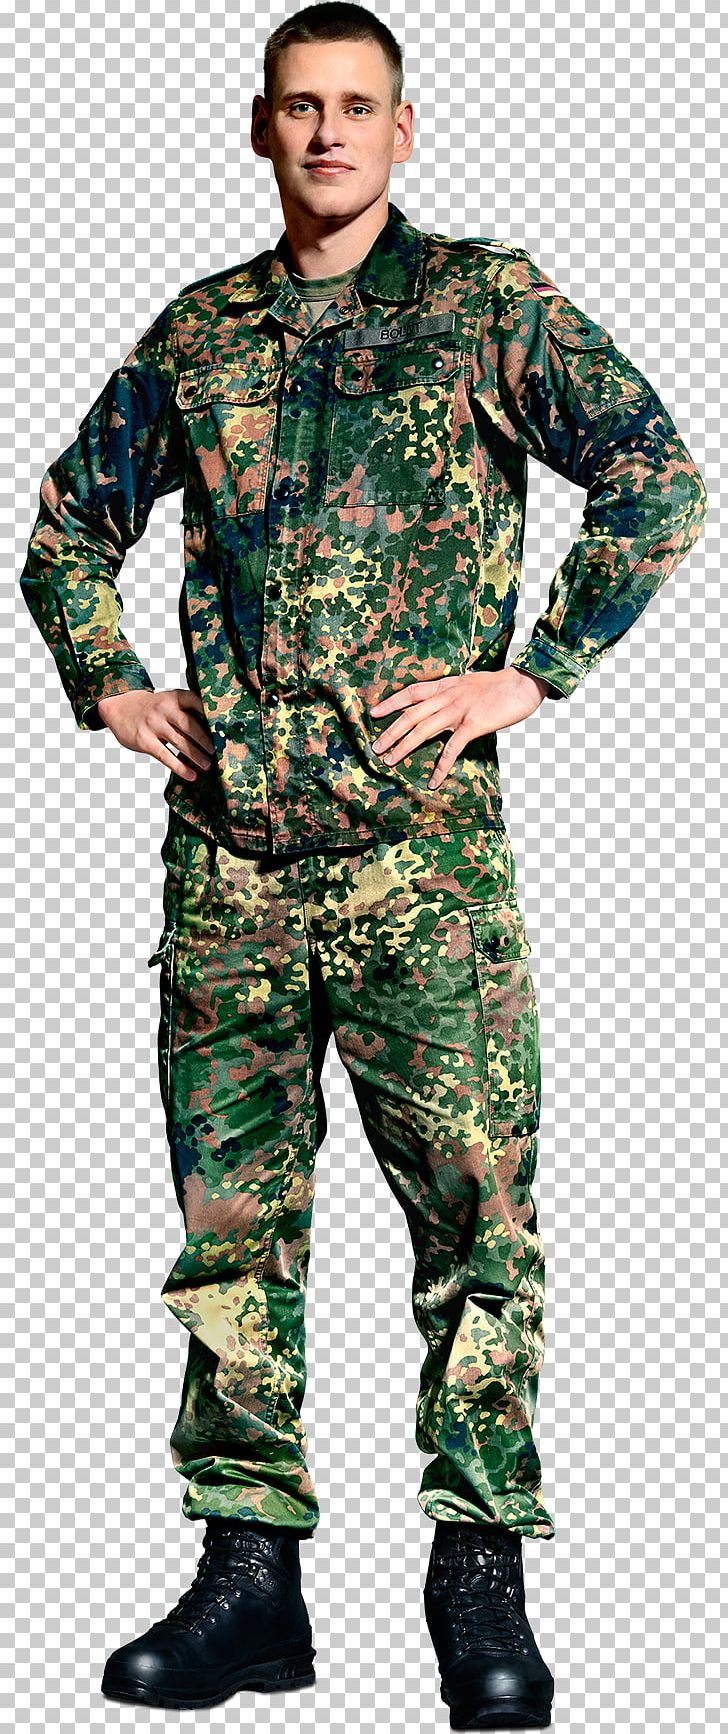 Military Camouflage Soldier Die Rekruten Army PNG, Clipart, Army, Ausbilder, Camouflage, Costume, Die Rekruten Free PNG Download